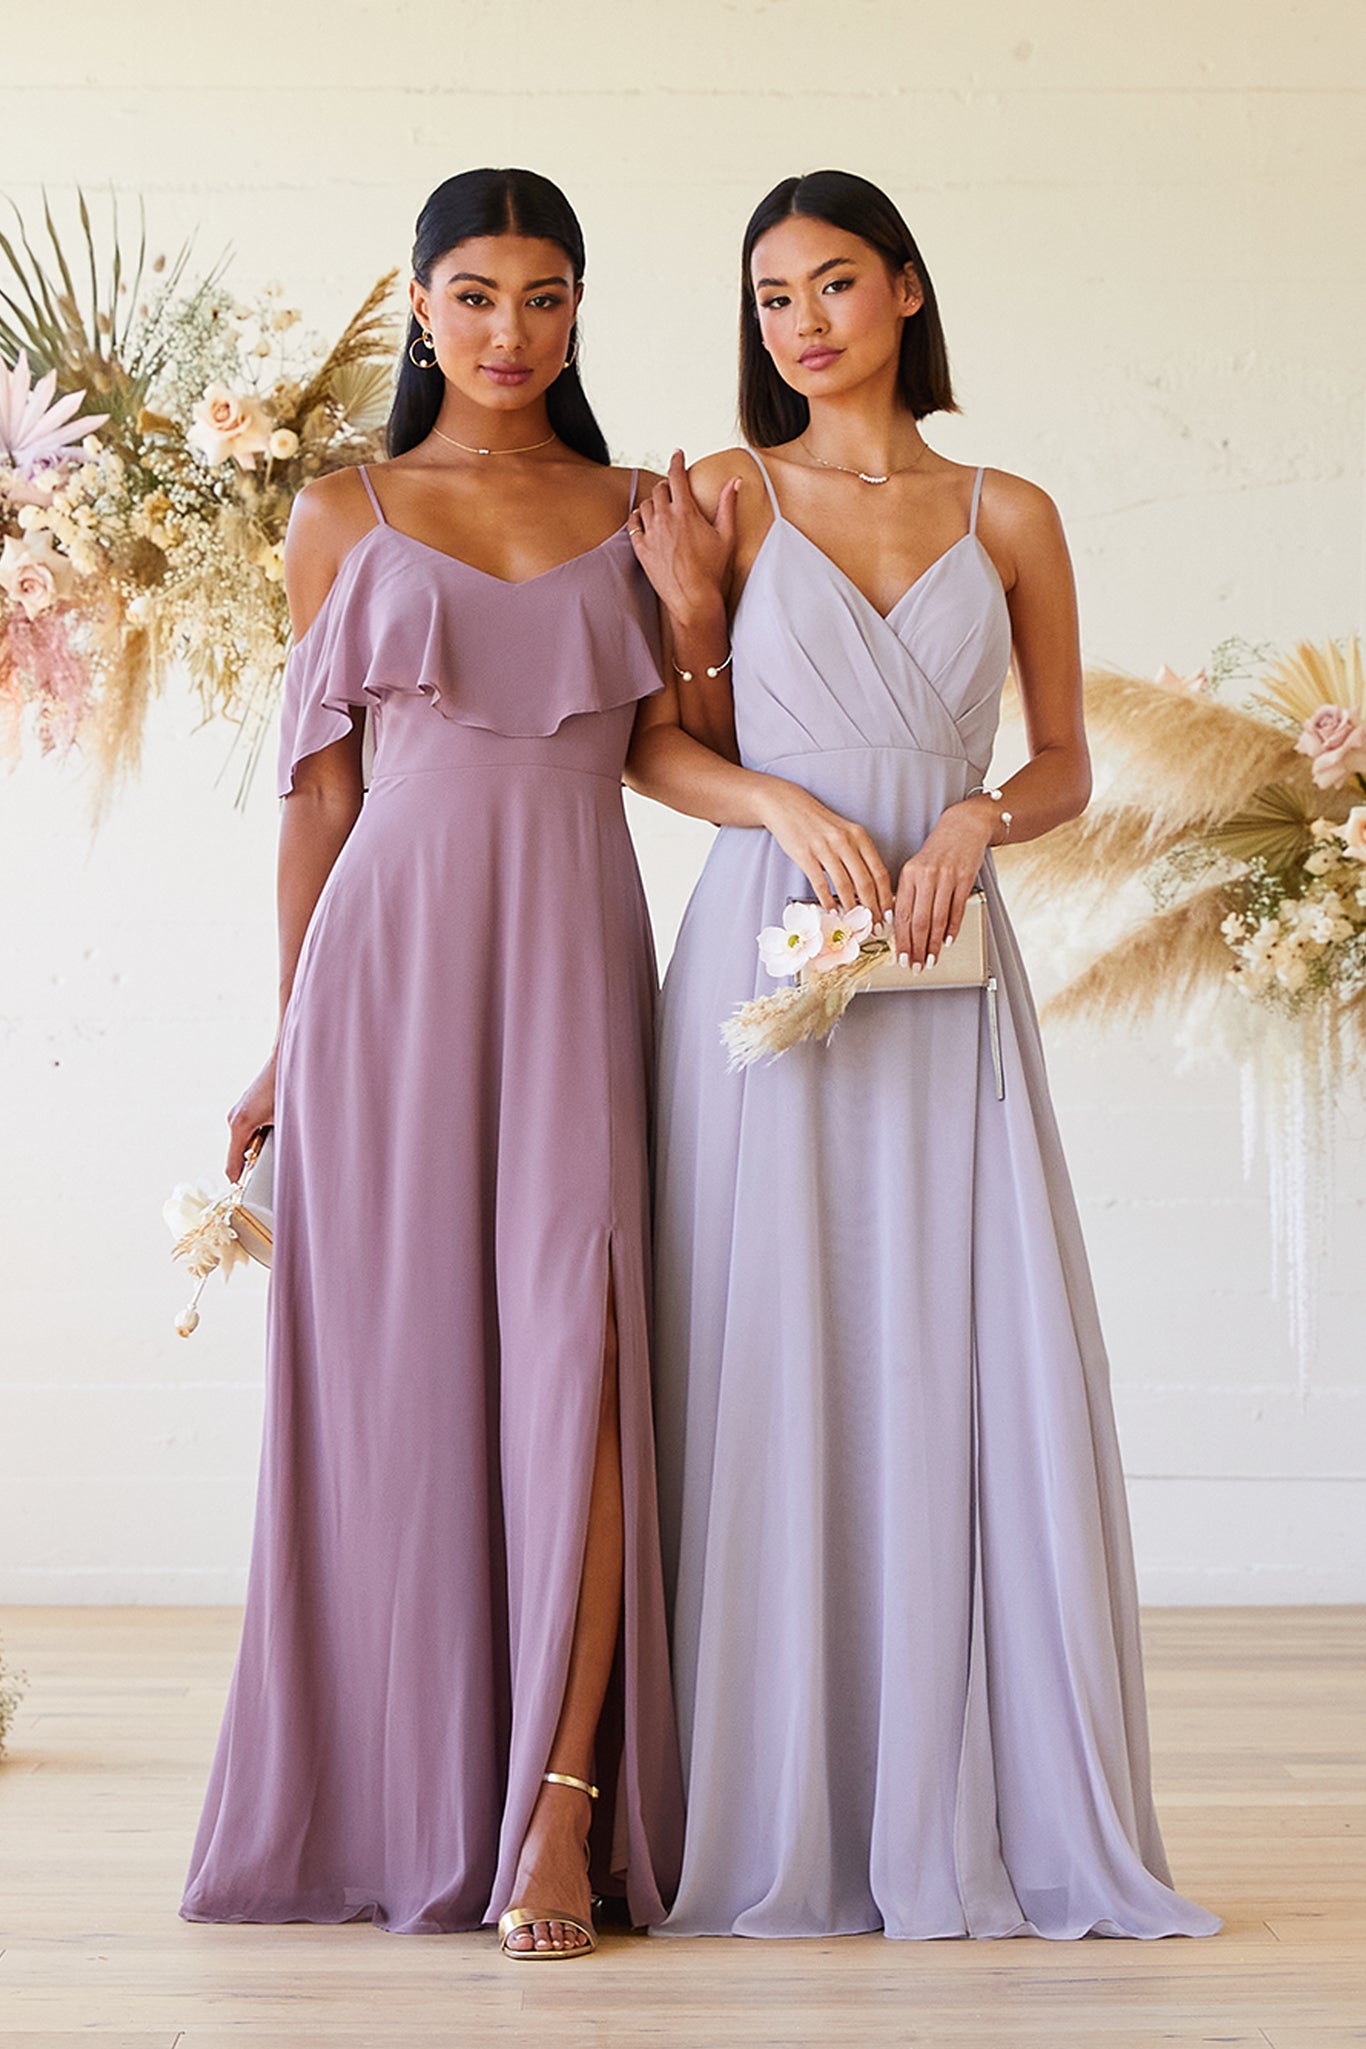 birdy grey bridesmaid dresses